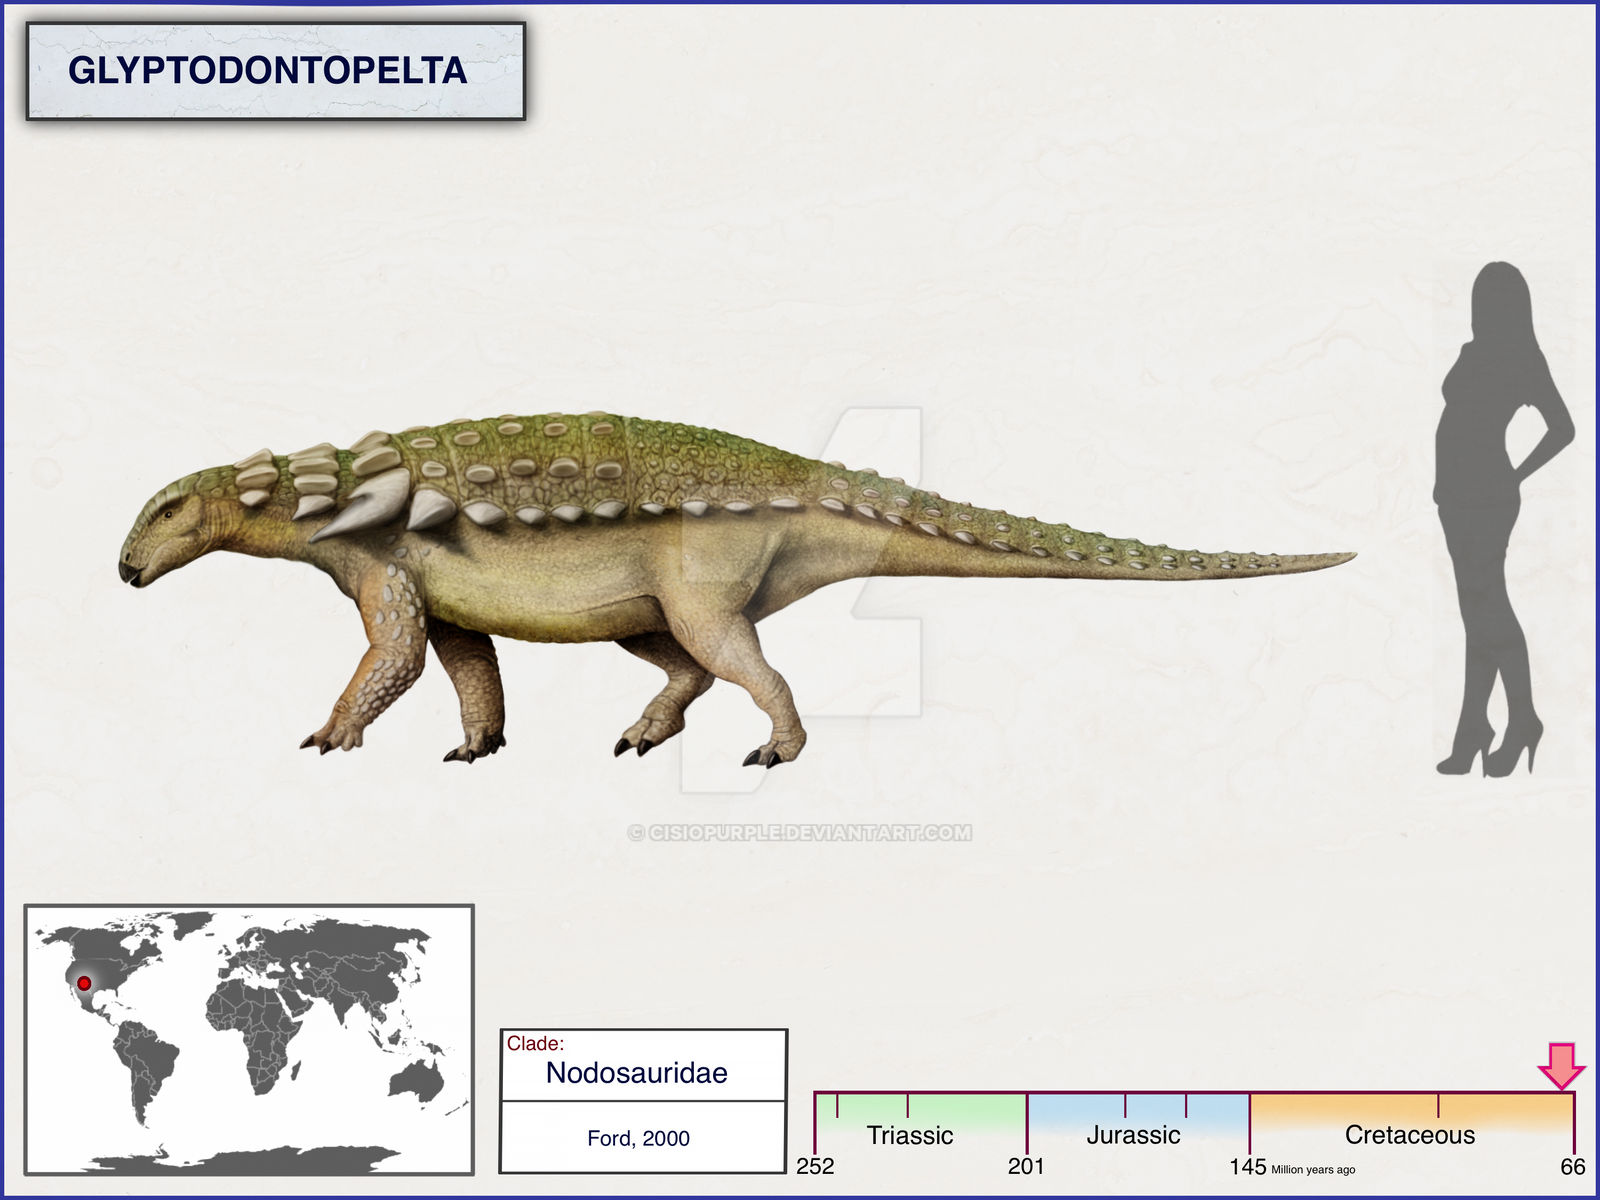 Glyptodontopelta